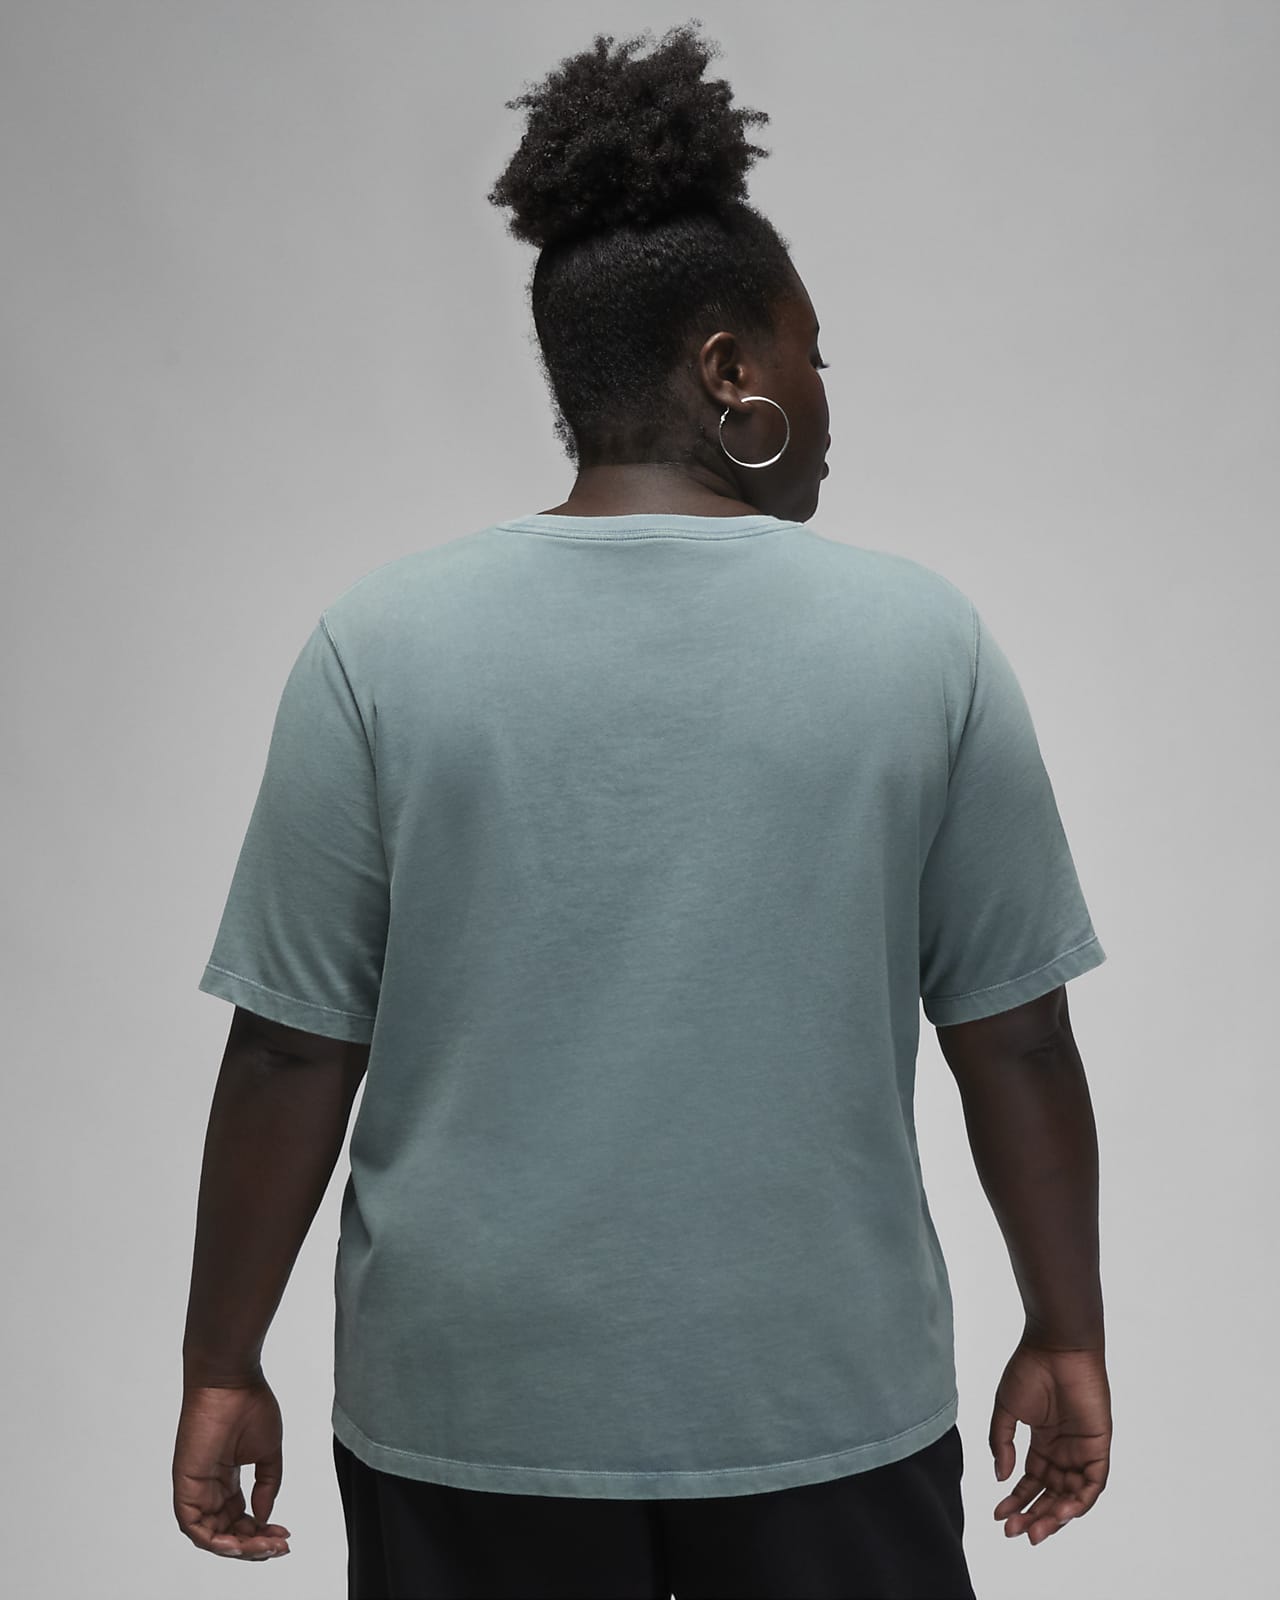 T-shirt oversize Jordan – Donna